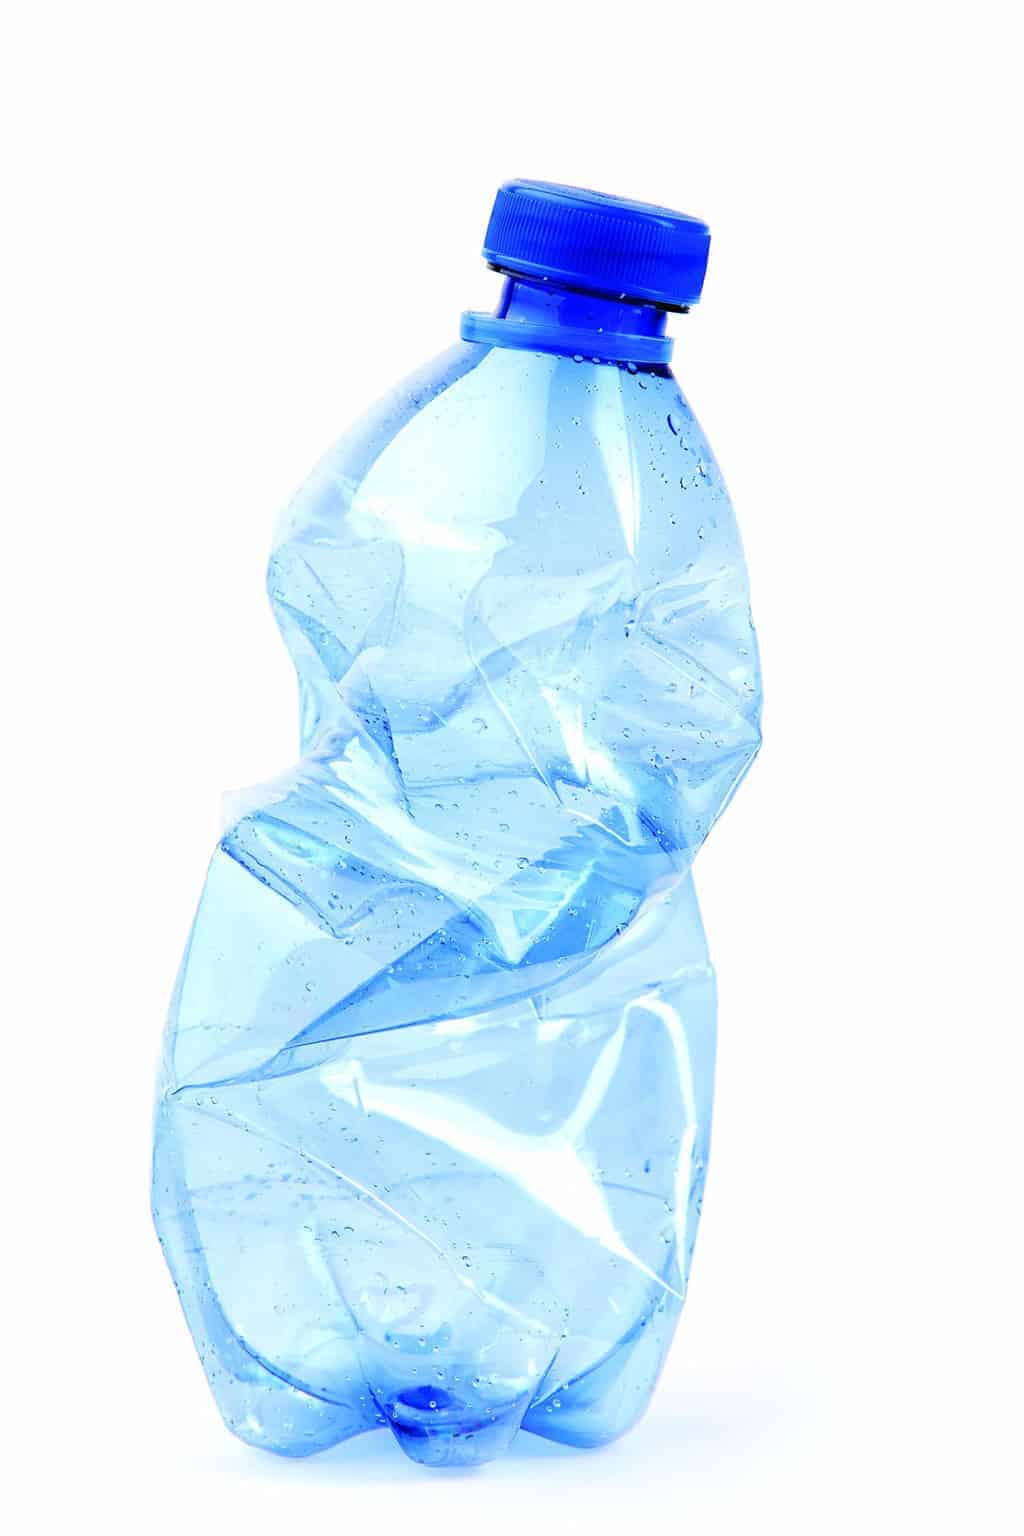 Crumpled plastic bottle